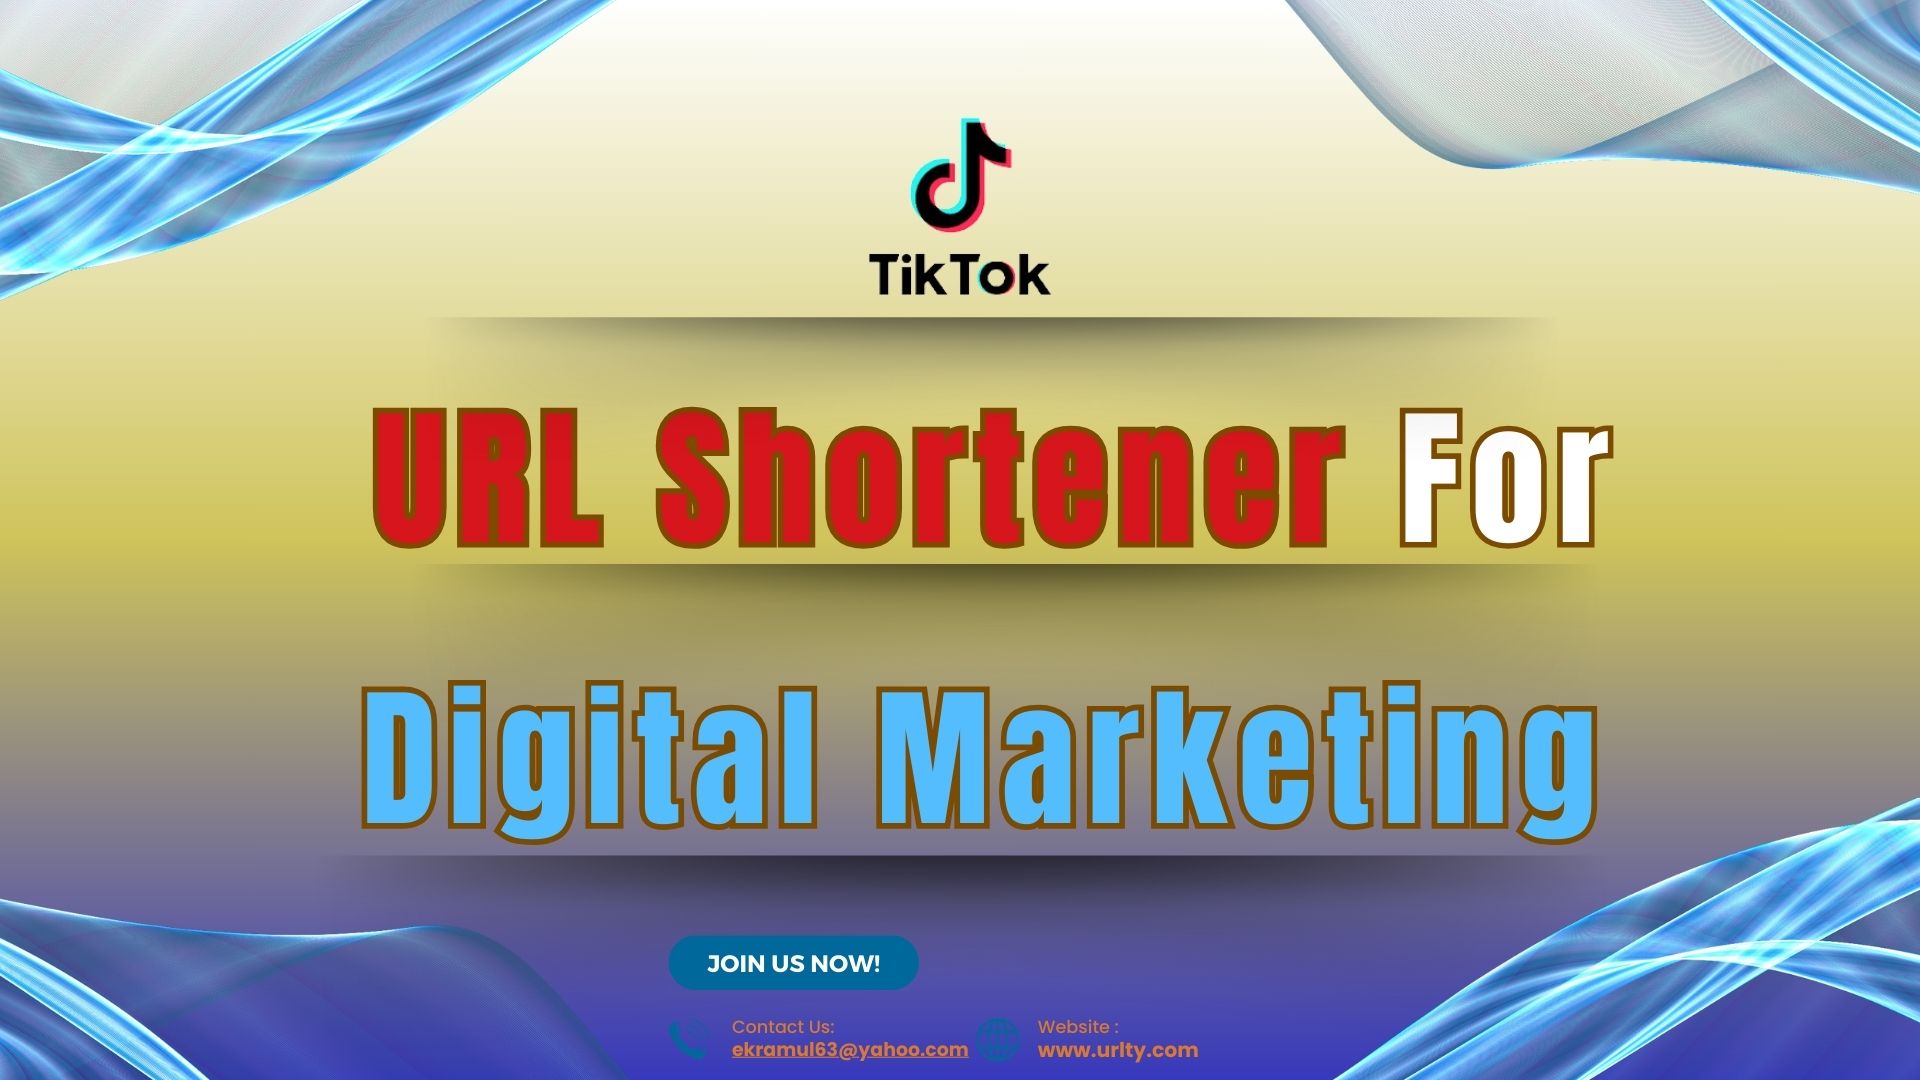 TikTok URL Shortener for Digital Marketing